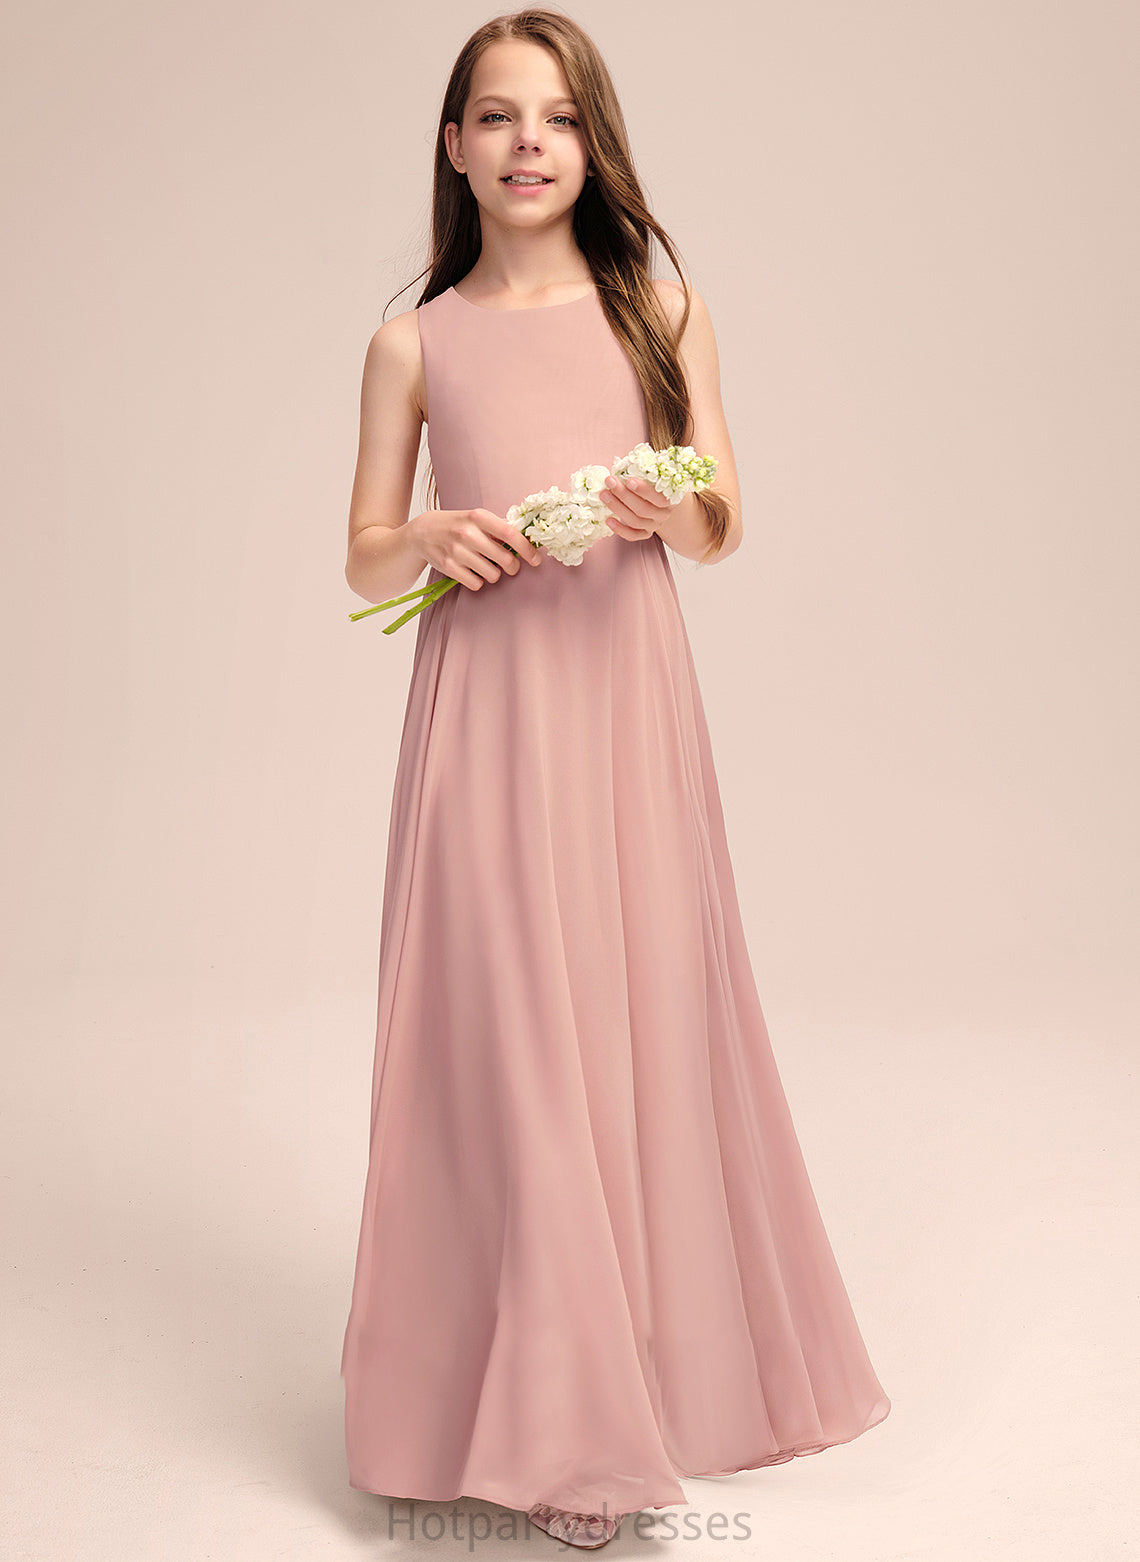 Scoop A-Line Floor-Length Junior Bridesmaid Dresses Neck With Bow(s) Mia Chiffon